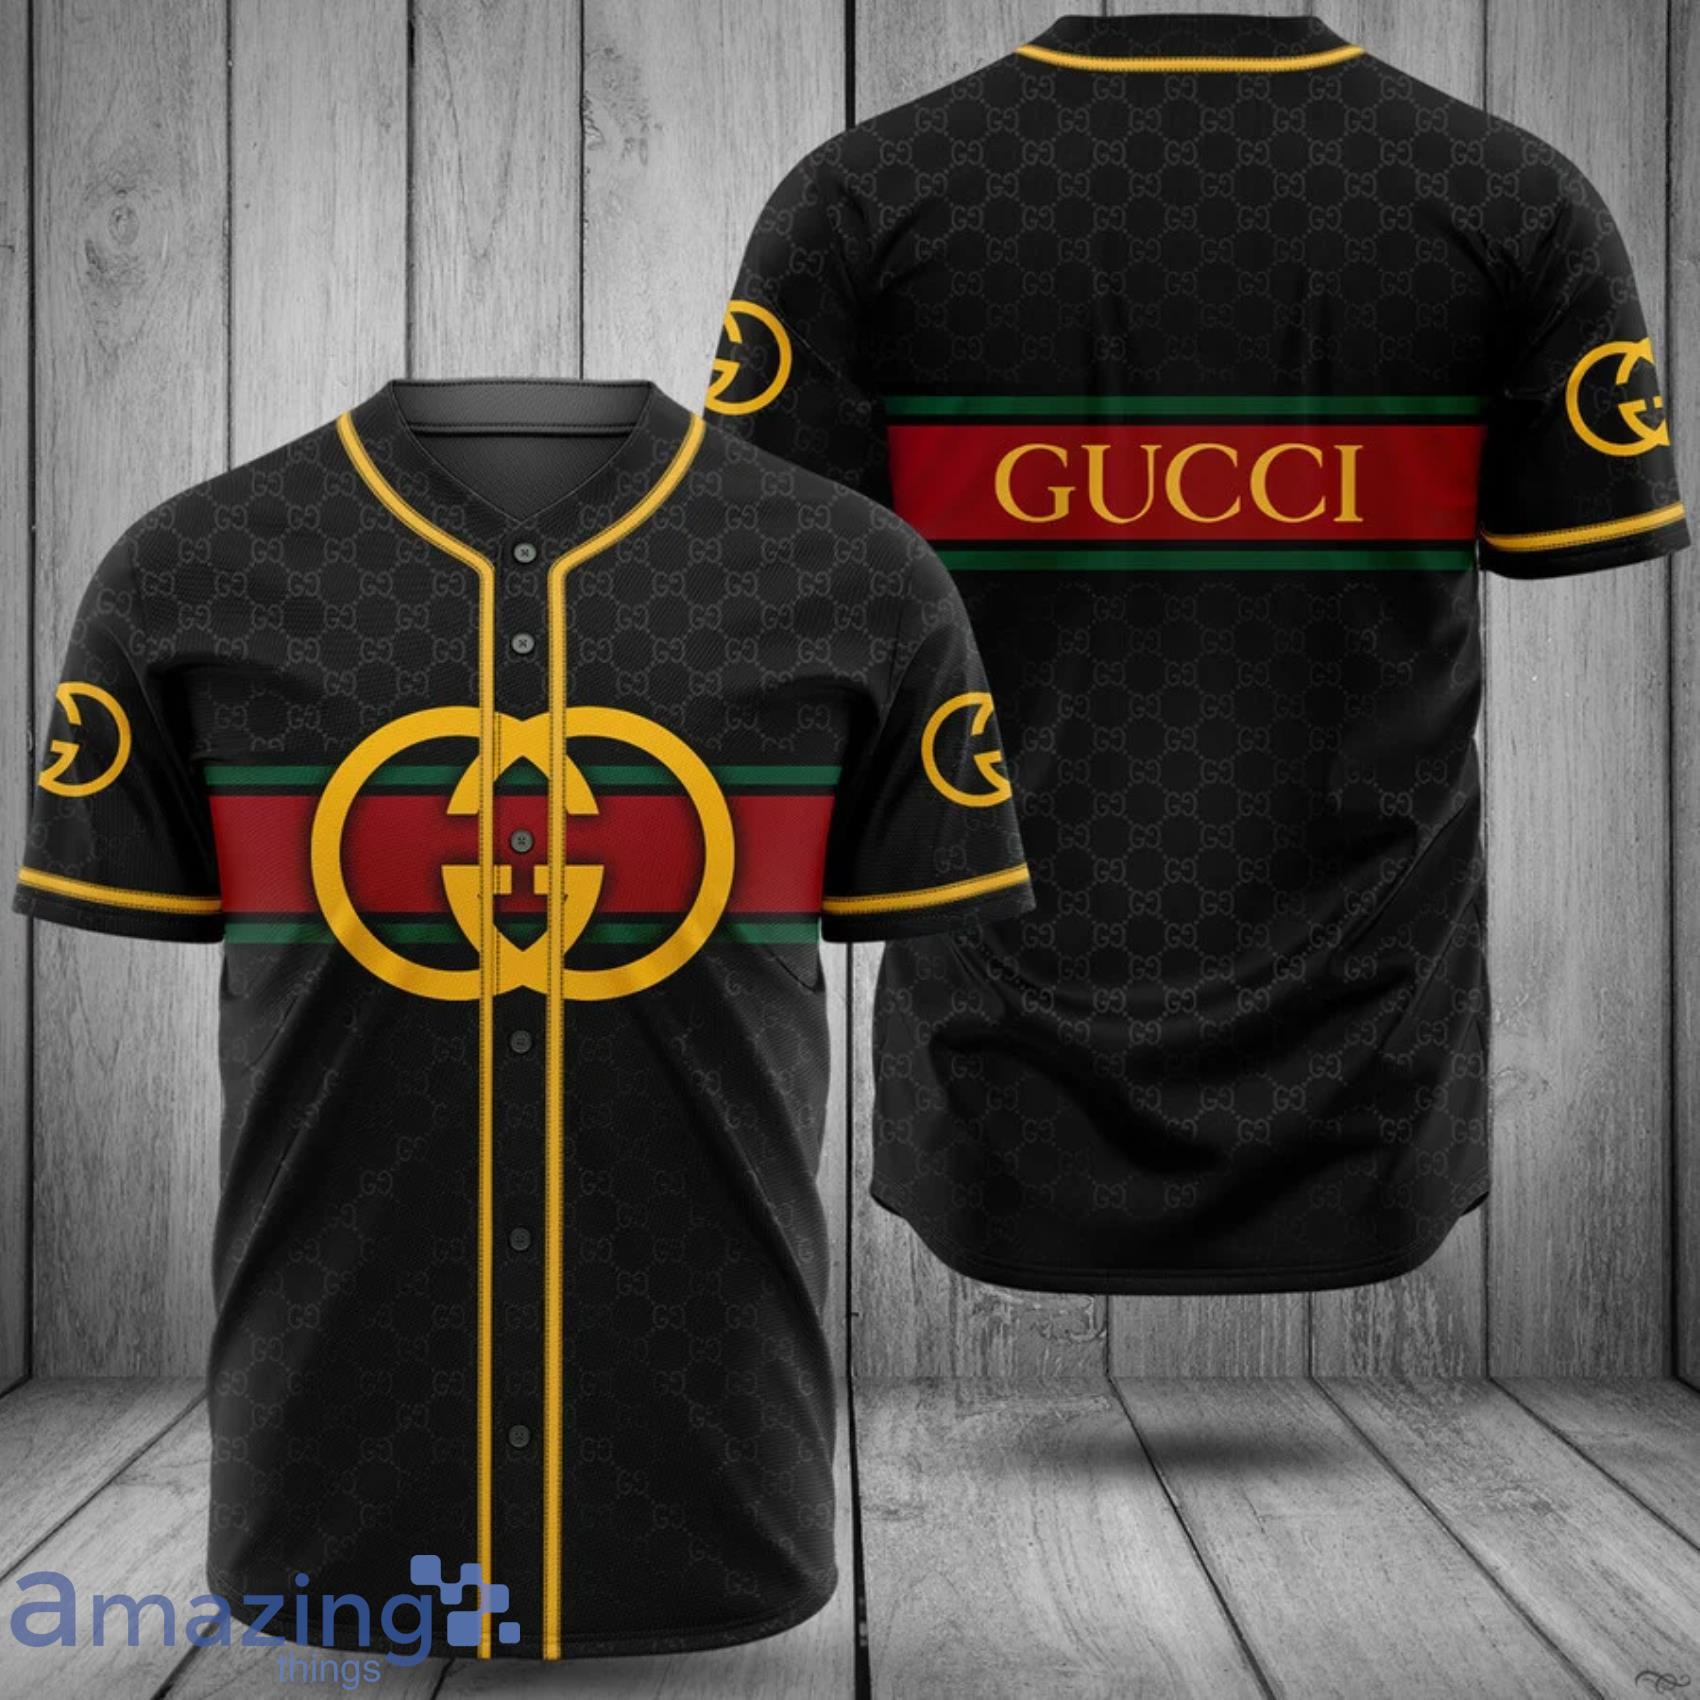 Gucci Baseball Jersey Clothes Sport For Men Women